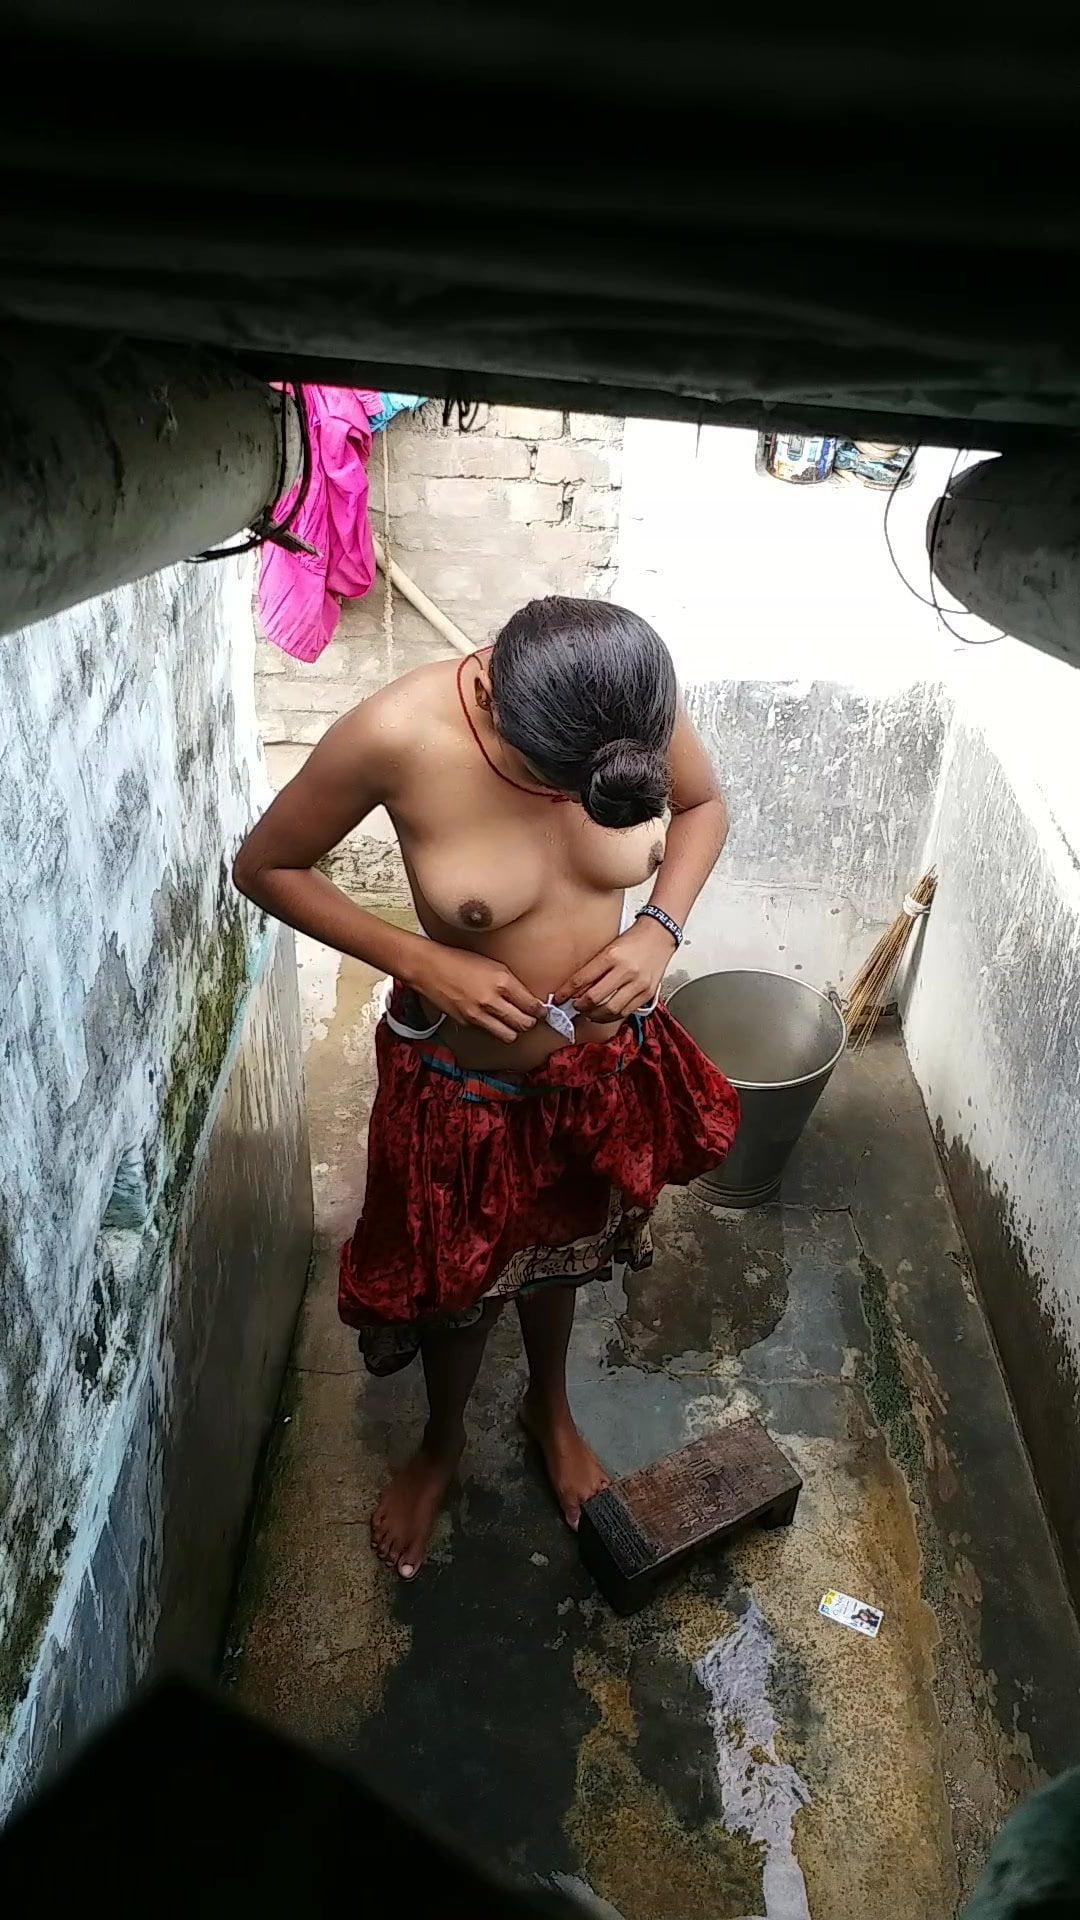 Mamata Ka Chut Ka Cudai Open - Saali Ki Chudai Bathroom Me, Free Indian Porn cc: xHamster